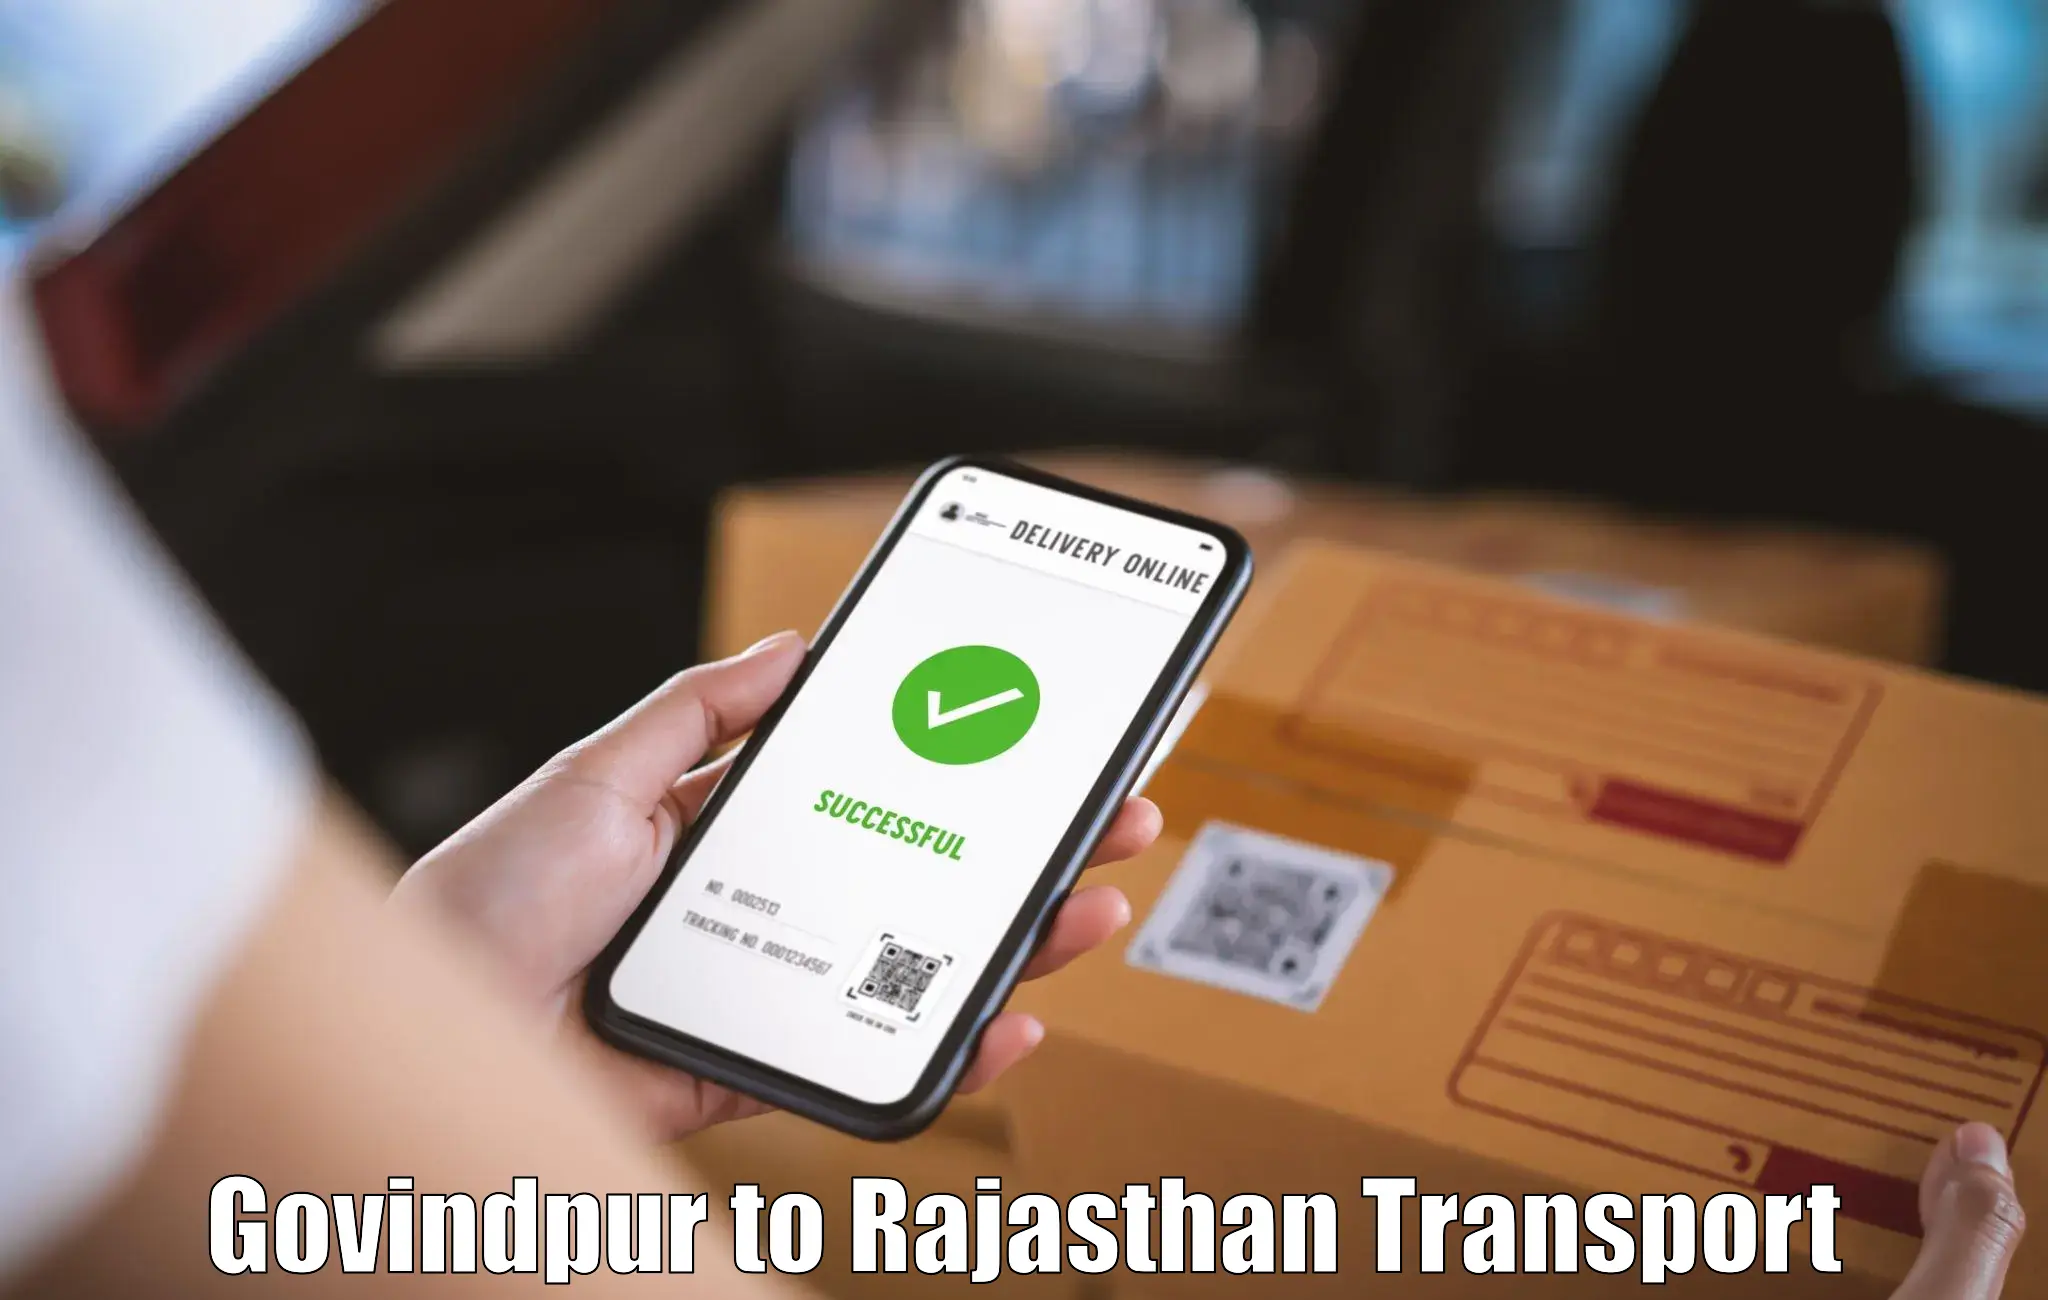 Container transport service Govindpur to Rawatsar